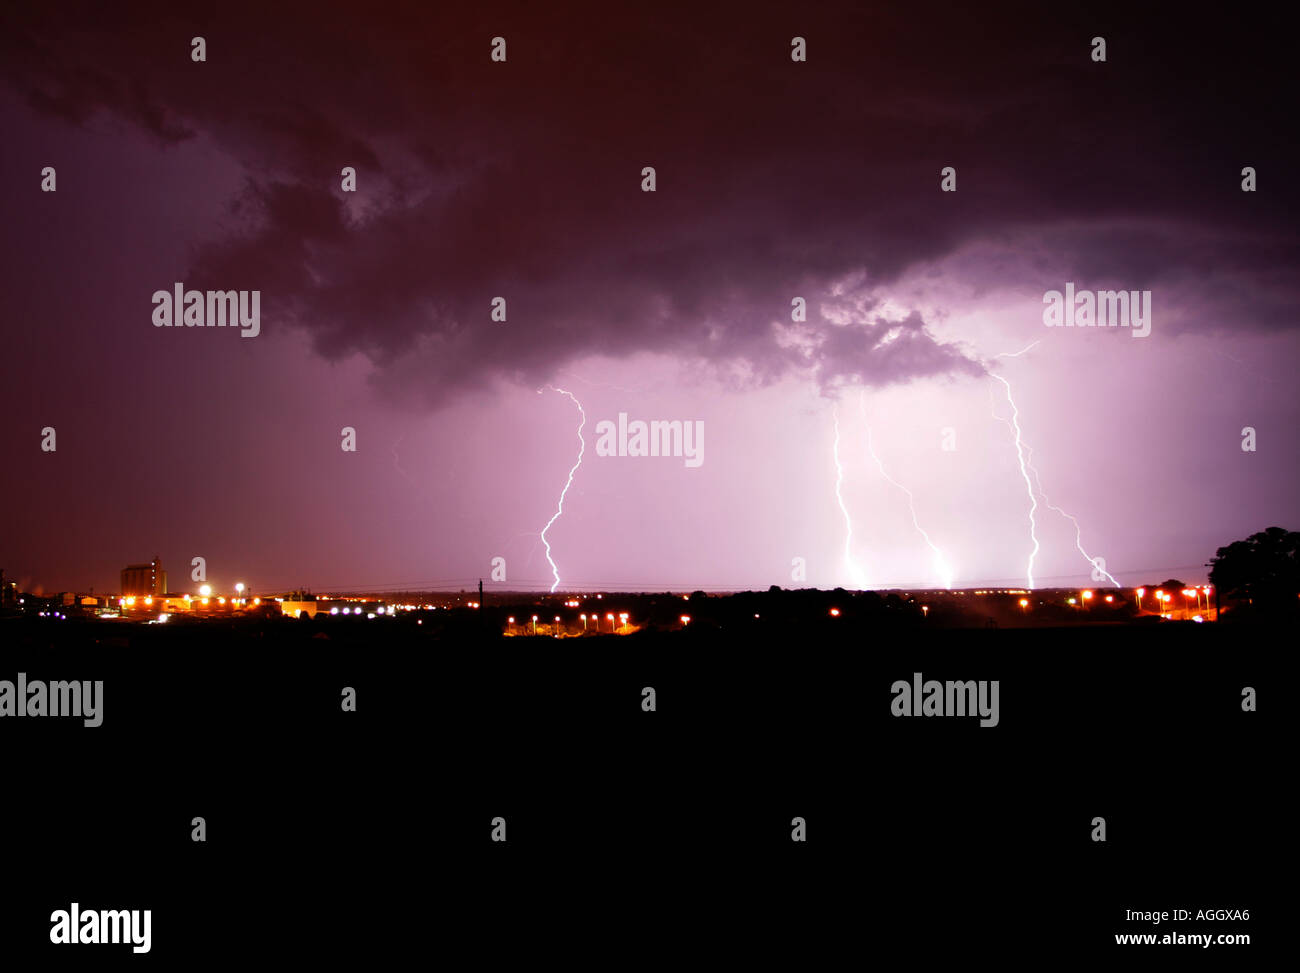 Lighting storm over Bury St Edmunds in Suffolk UK Stock Photo